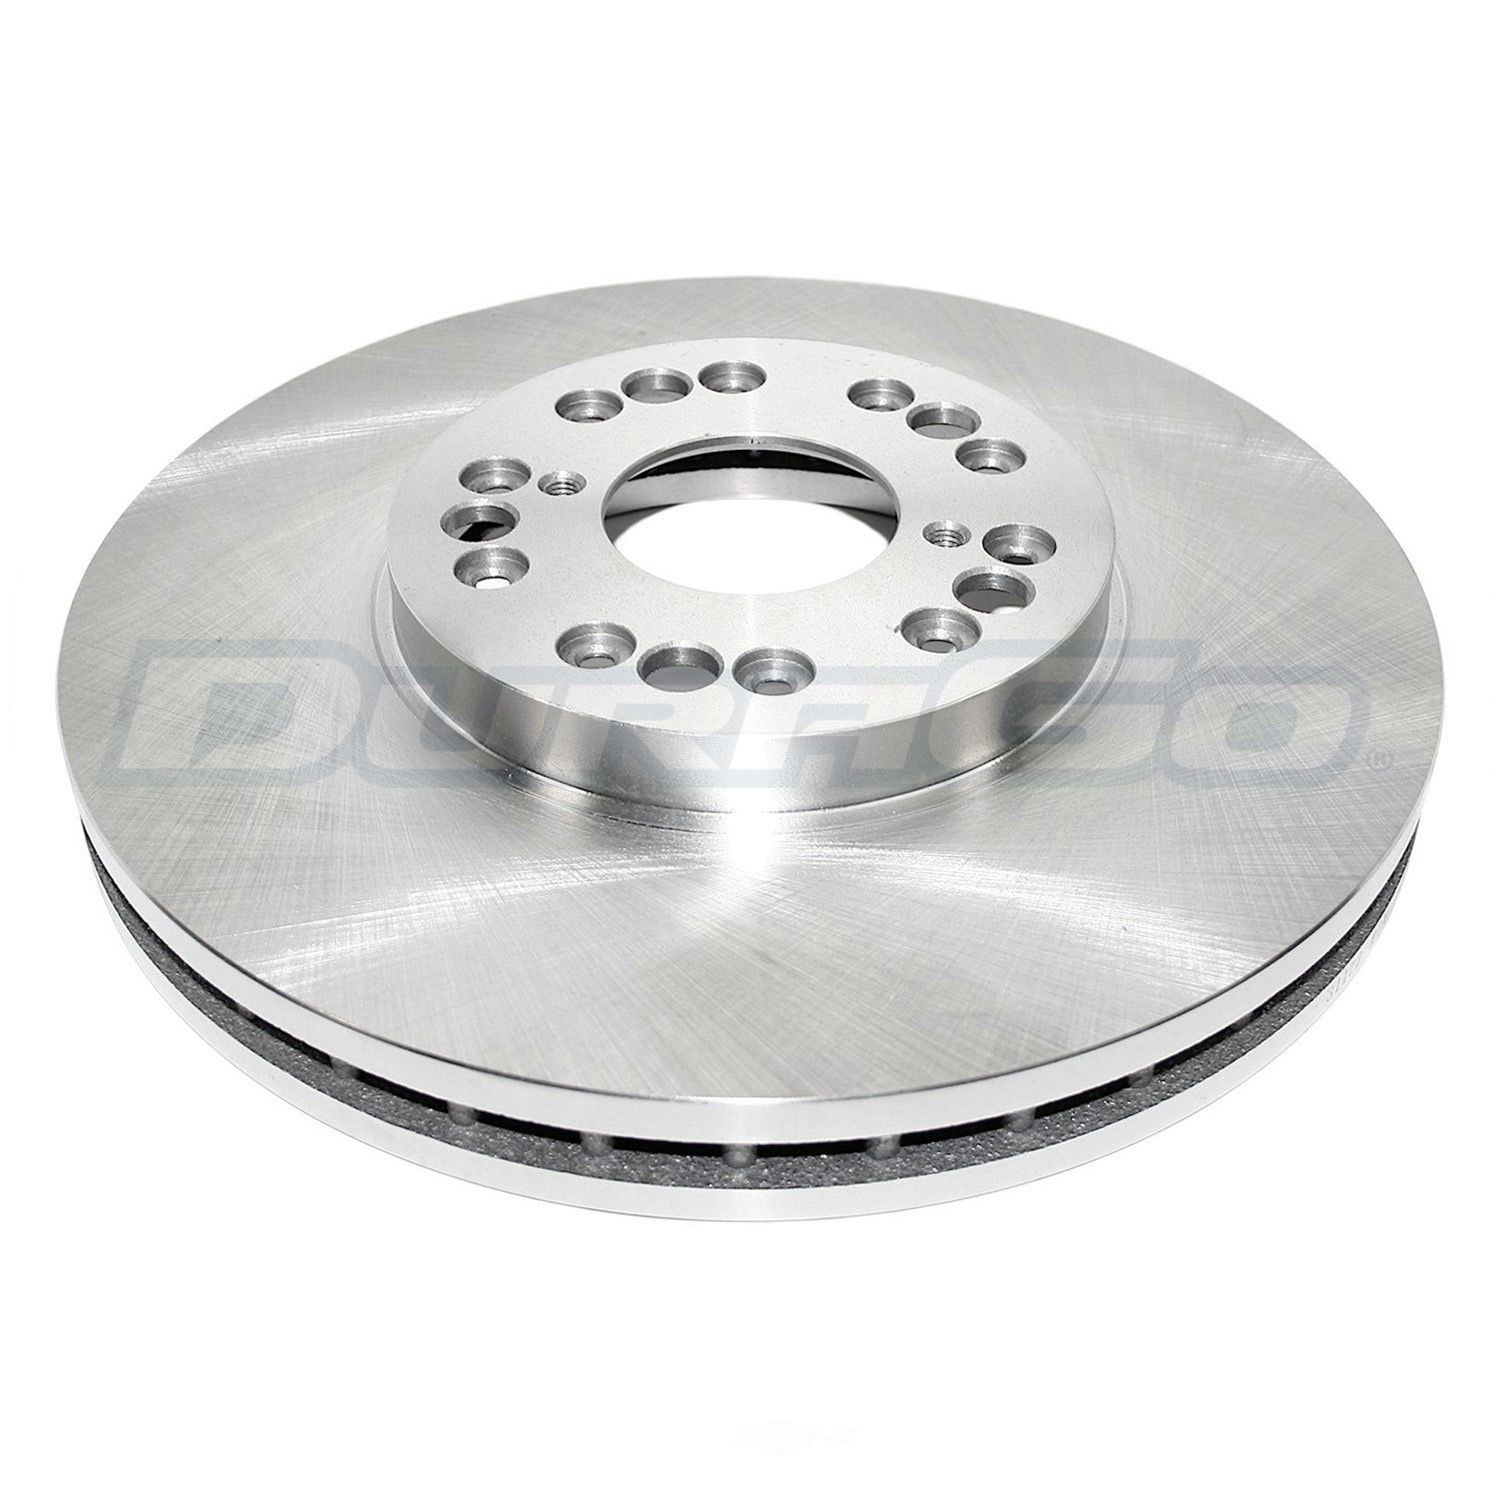 DURAGO - Disc Brake Rotor (Front) - D48 BR31172